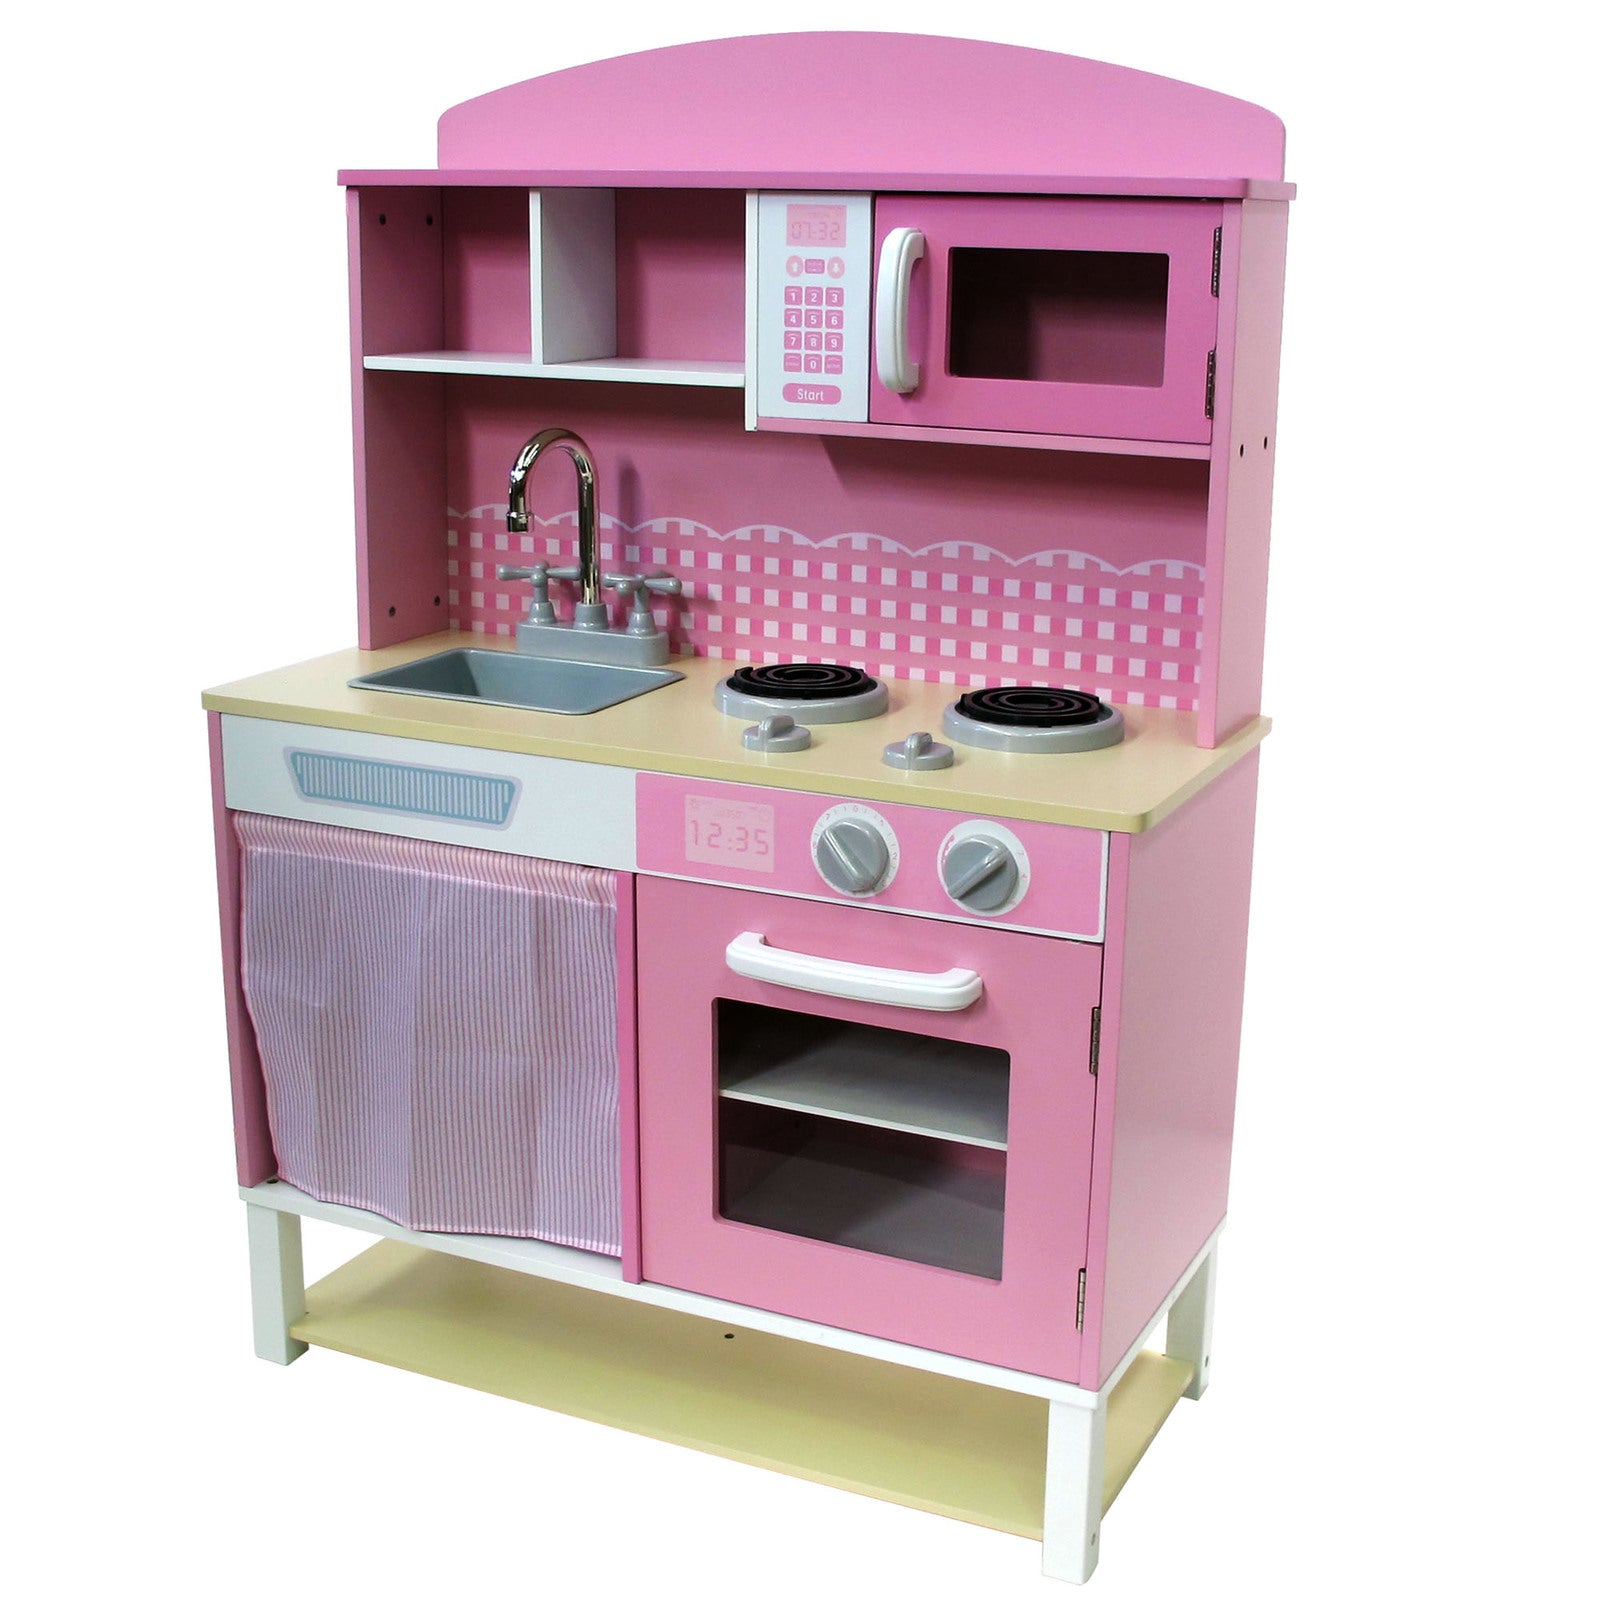 Wooden Play Kitchen - Pink Hampton